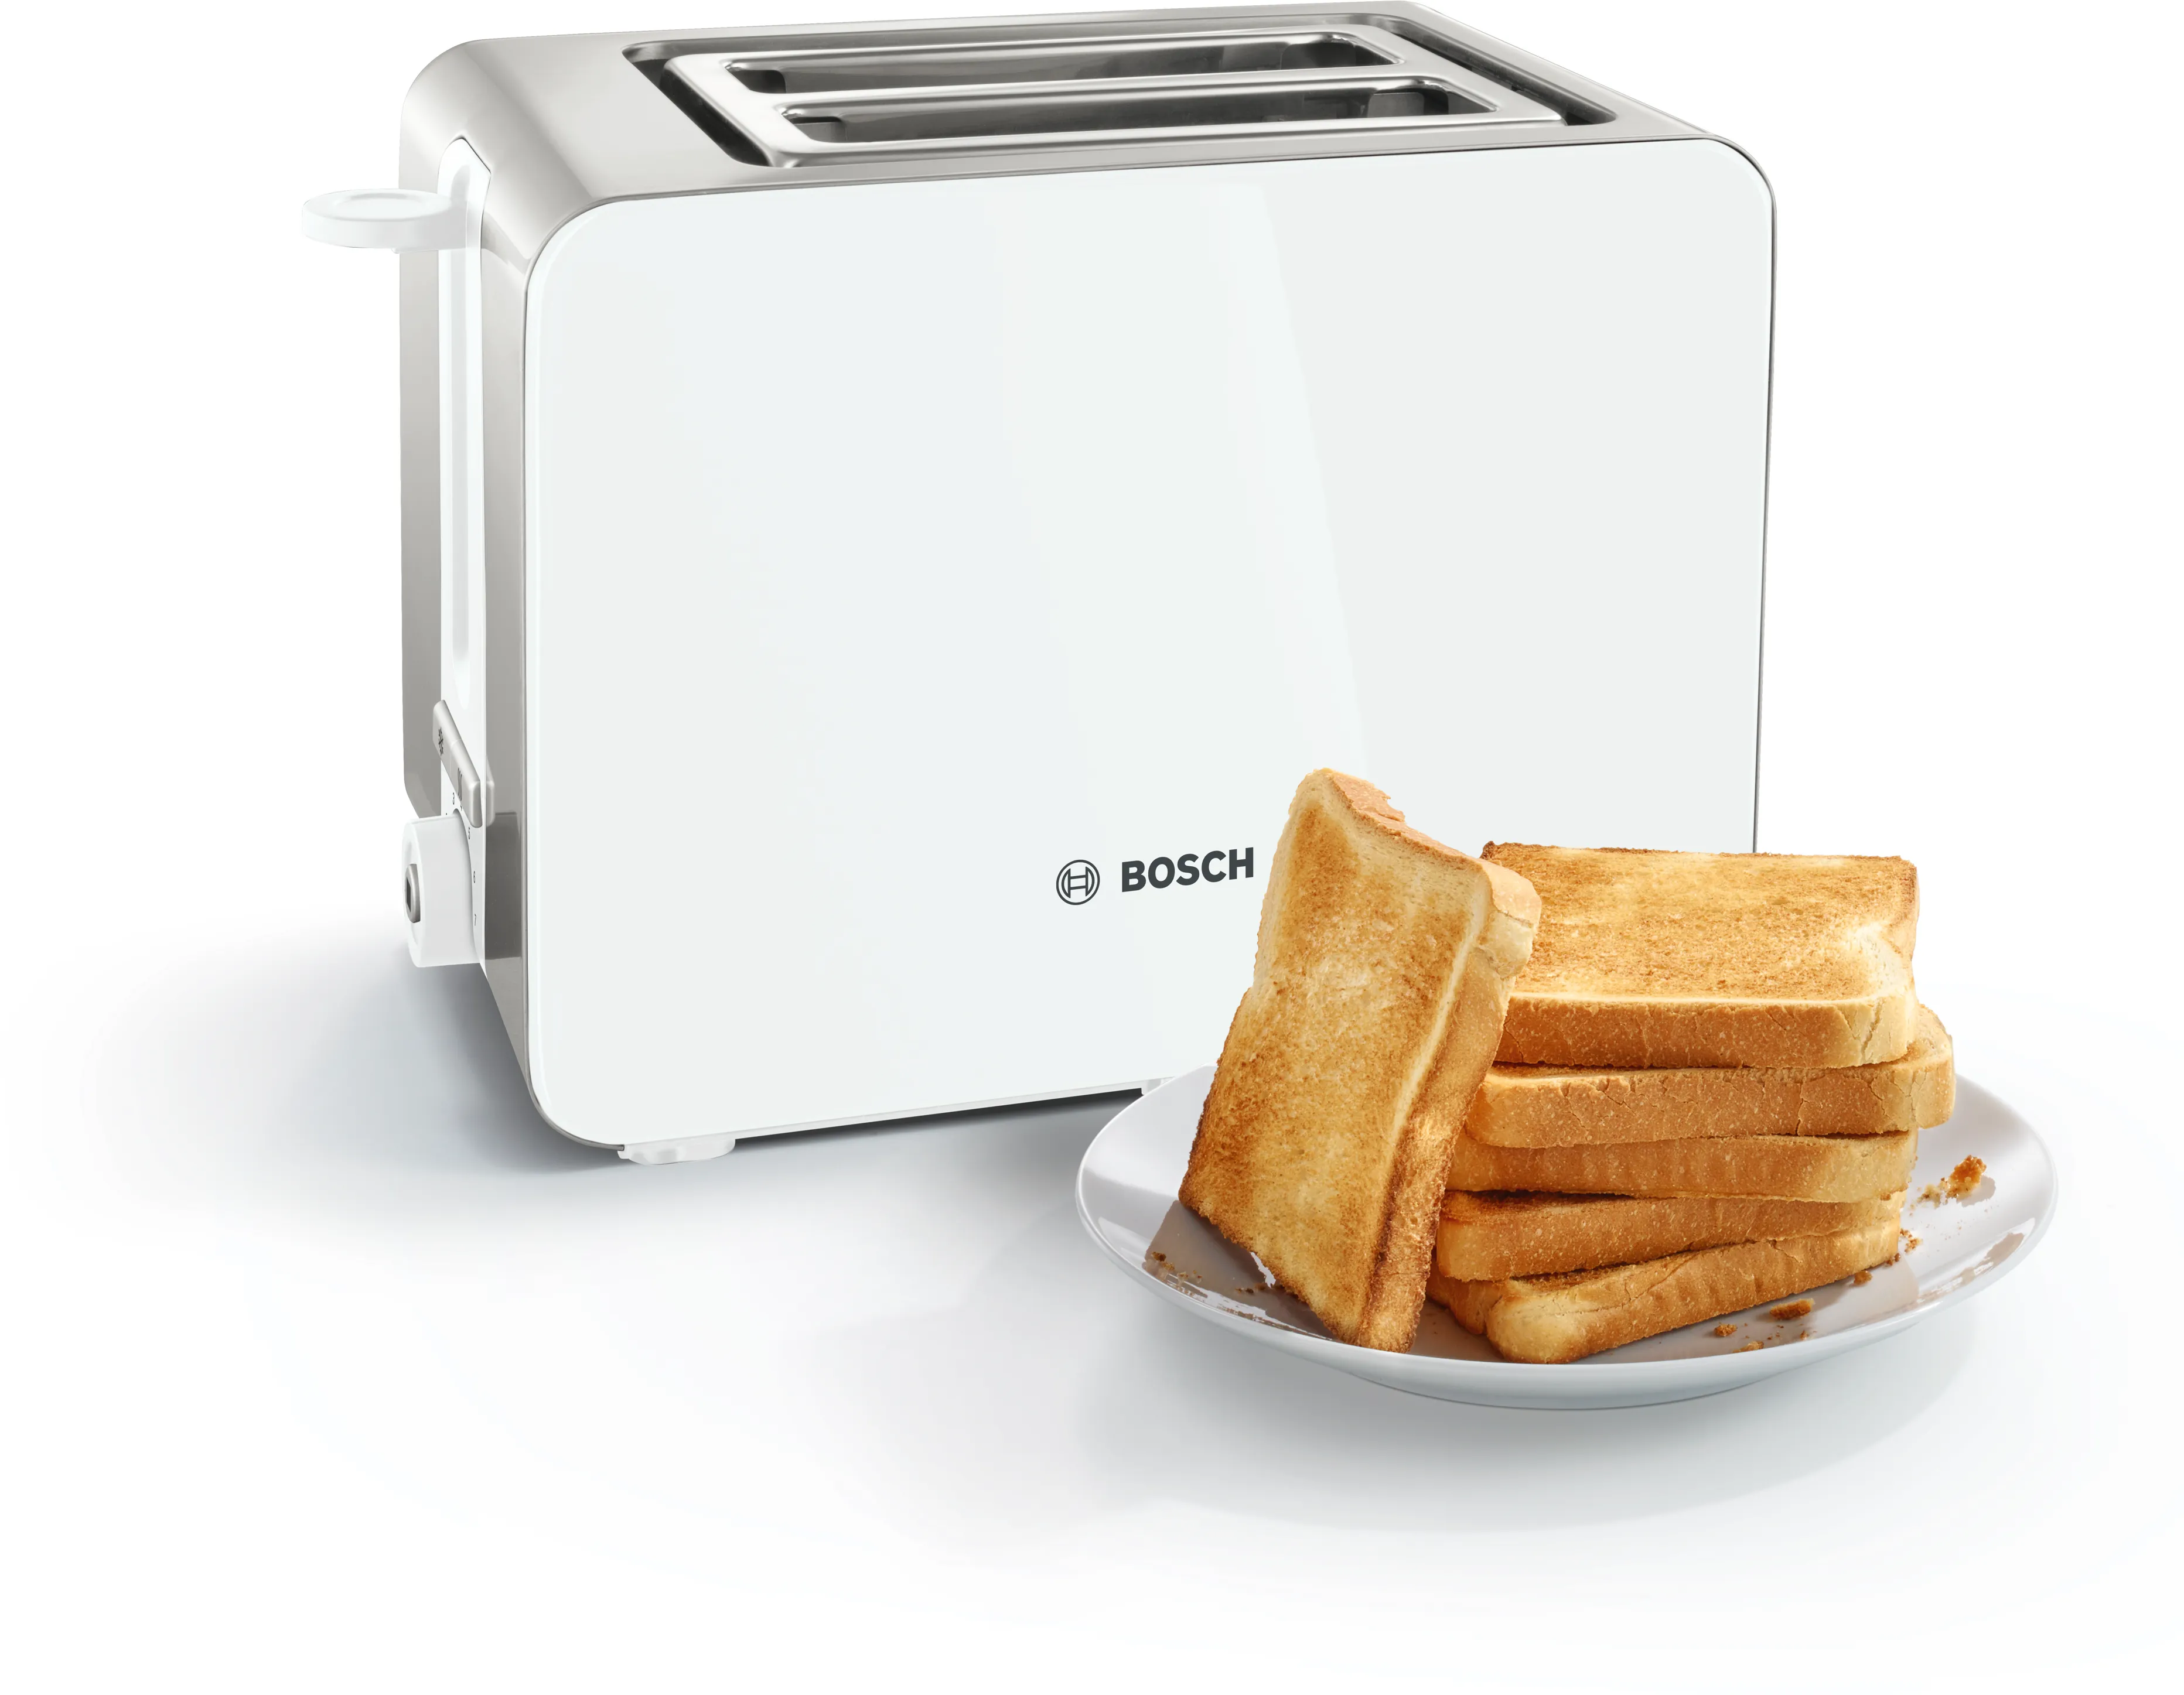 TAT7201GB Compact toaster